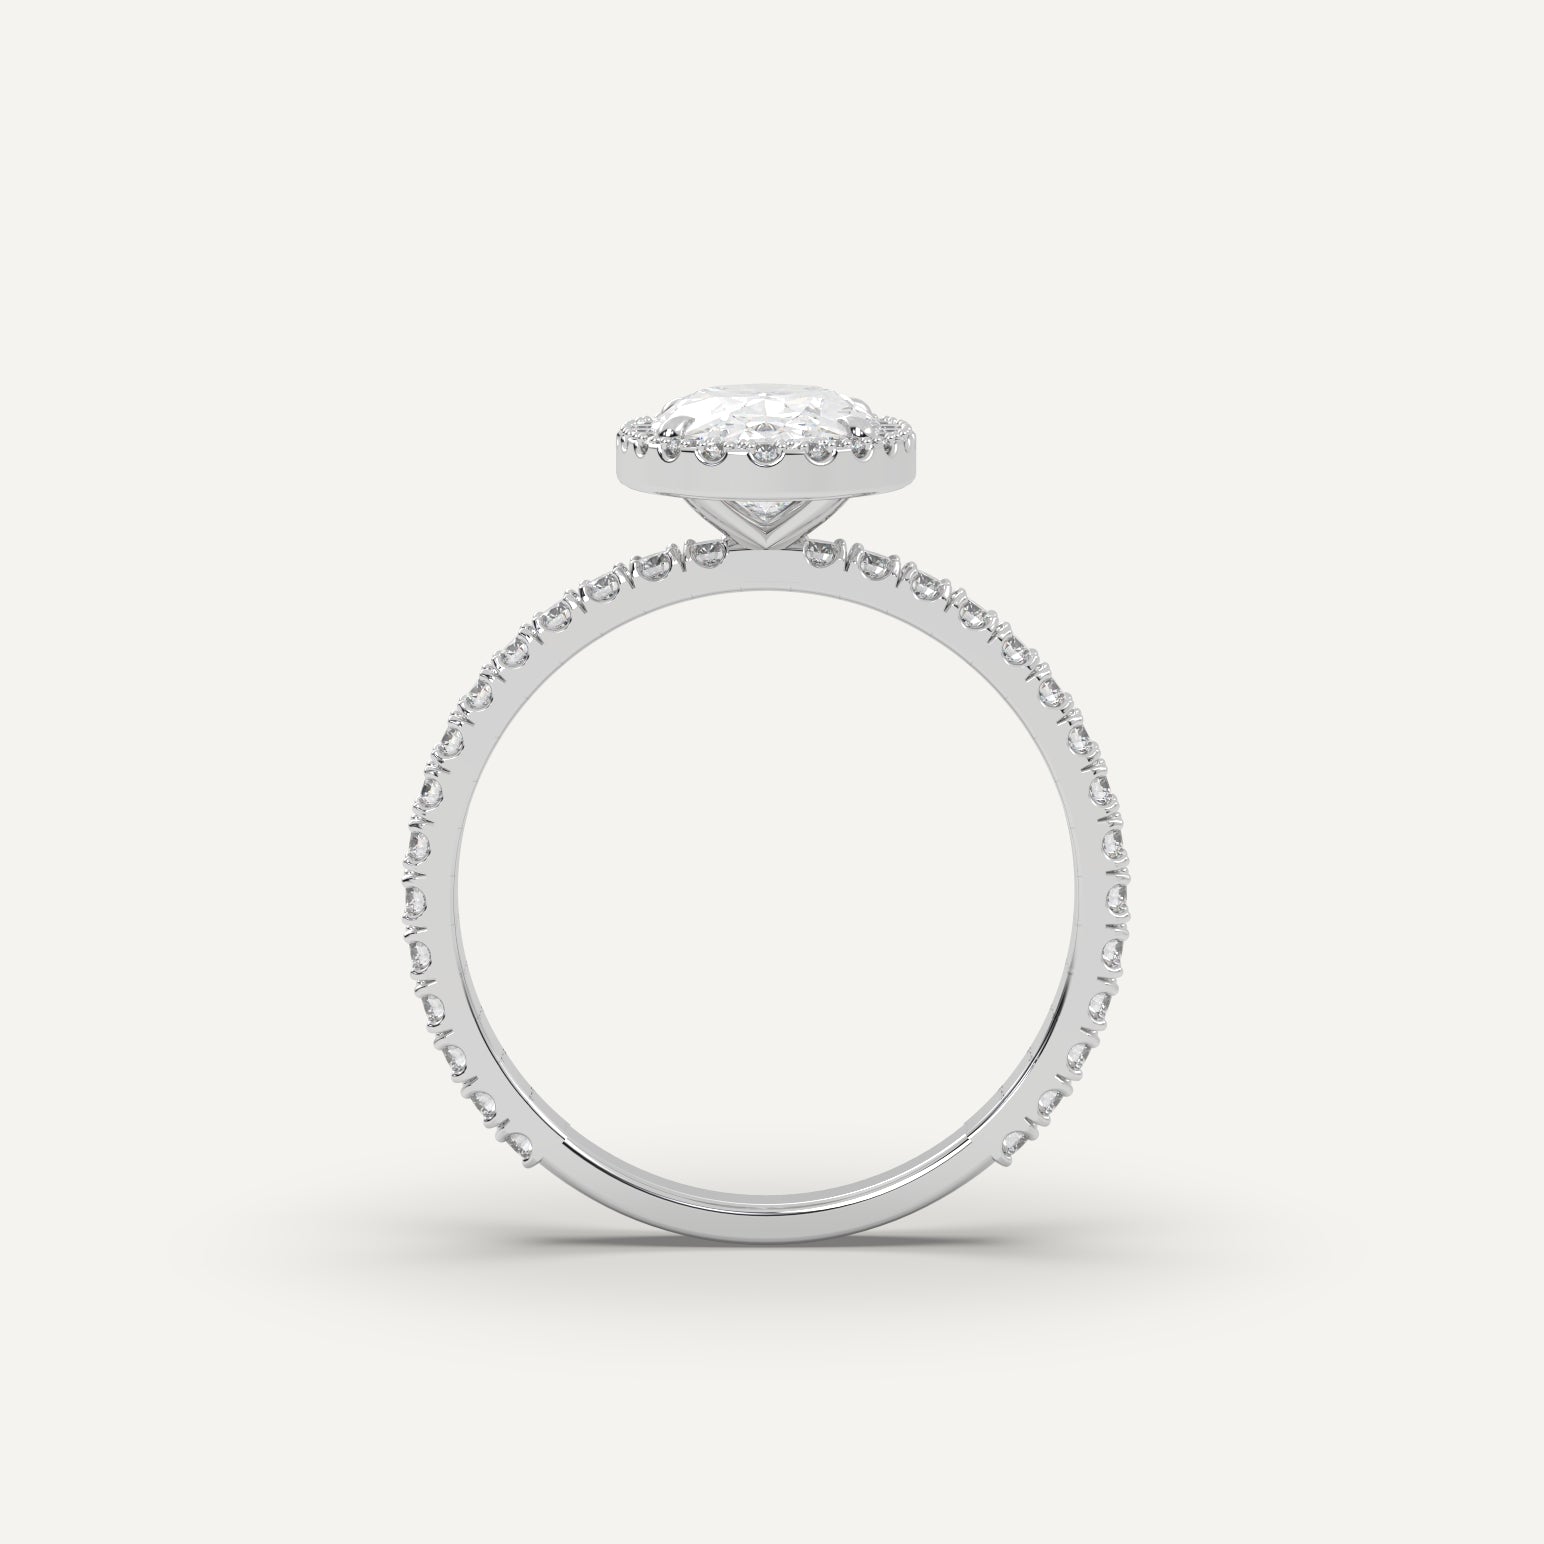 Oval Cut Diamond Engagement Ring - 1 carat